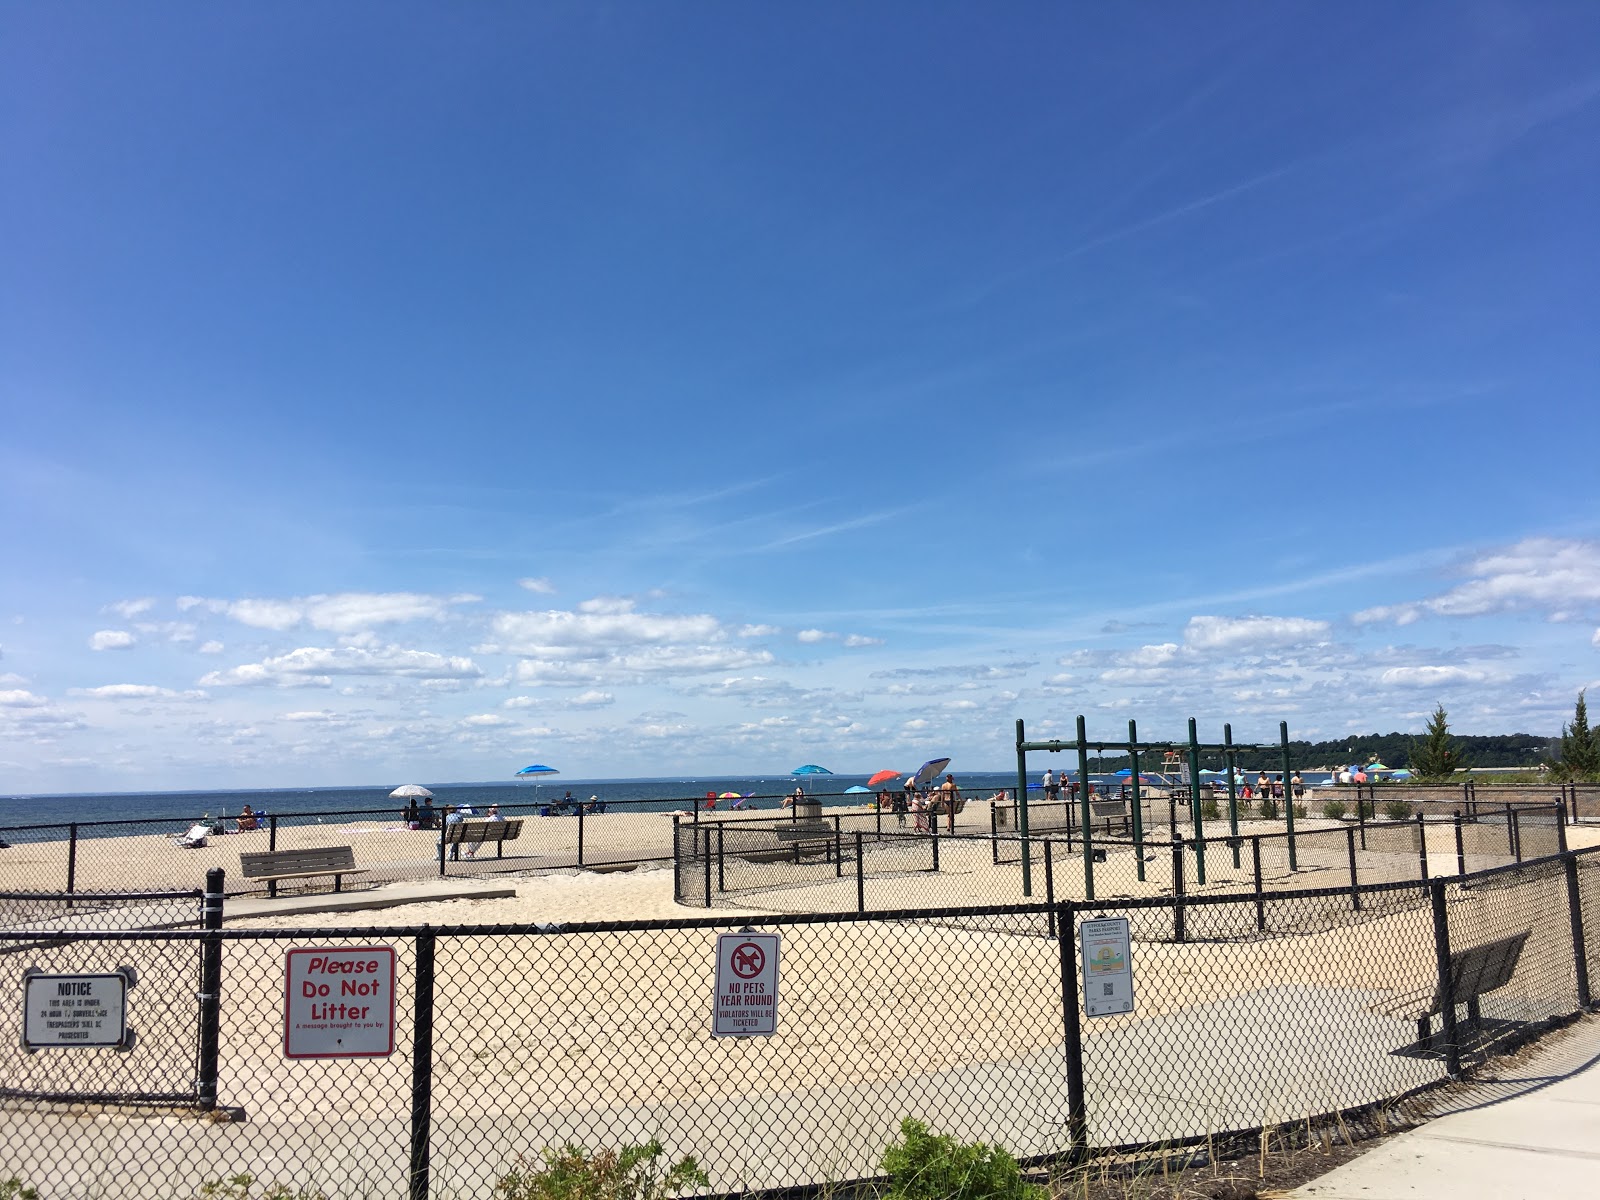 Foto af West Meadow Beach - populært sted blandt afslapningskendere